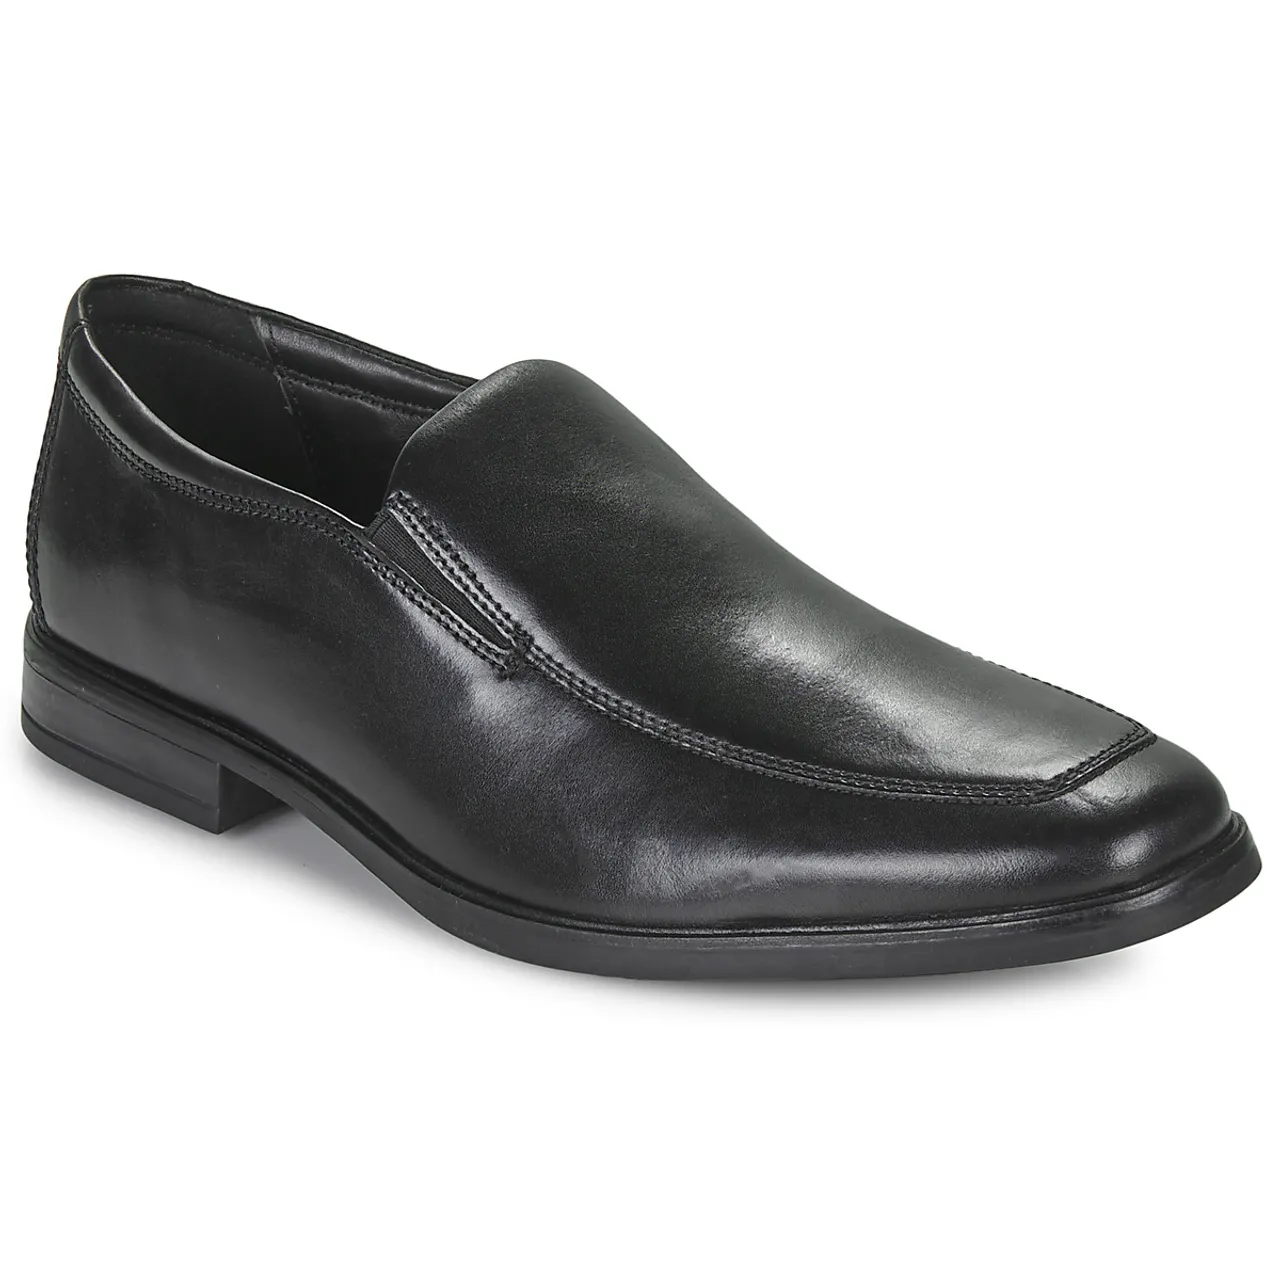 Clarks  HOWARD EDGE  men's Casual Shoes in Black